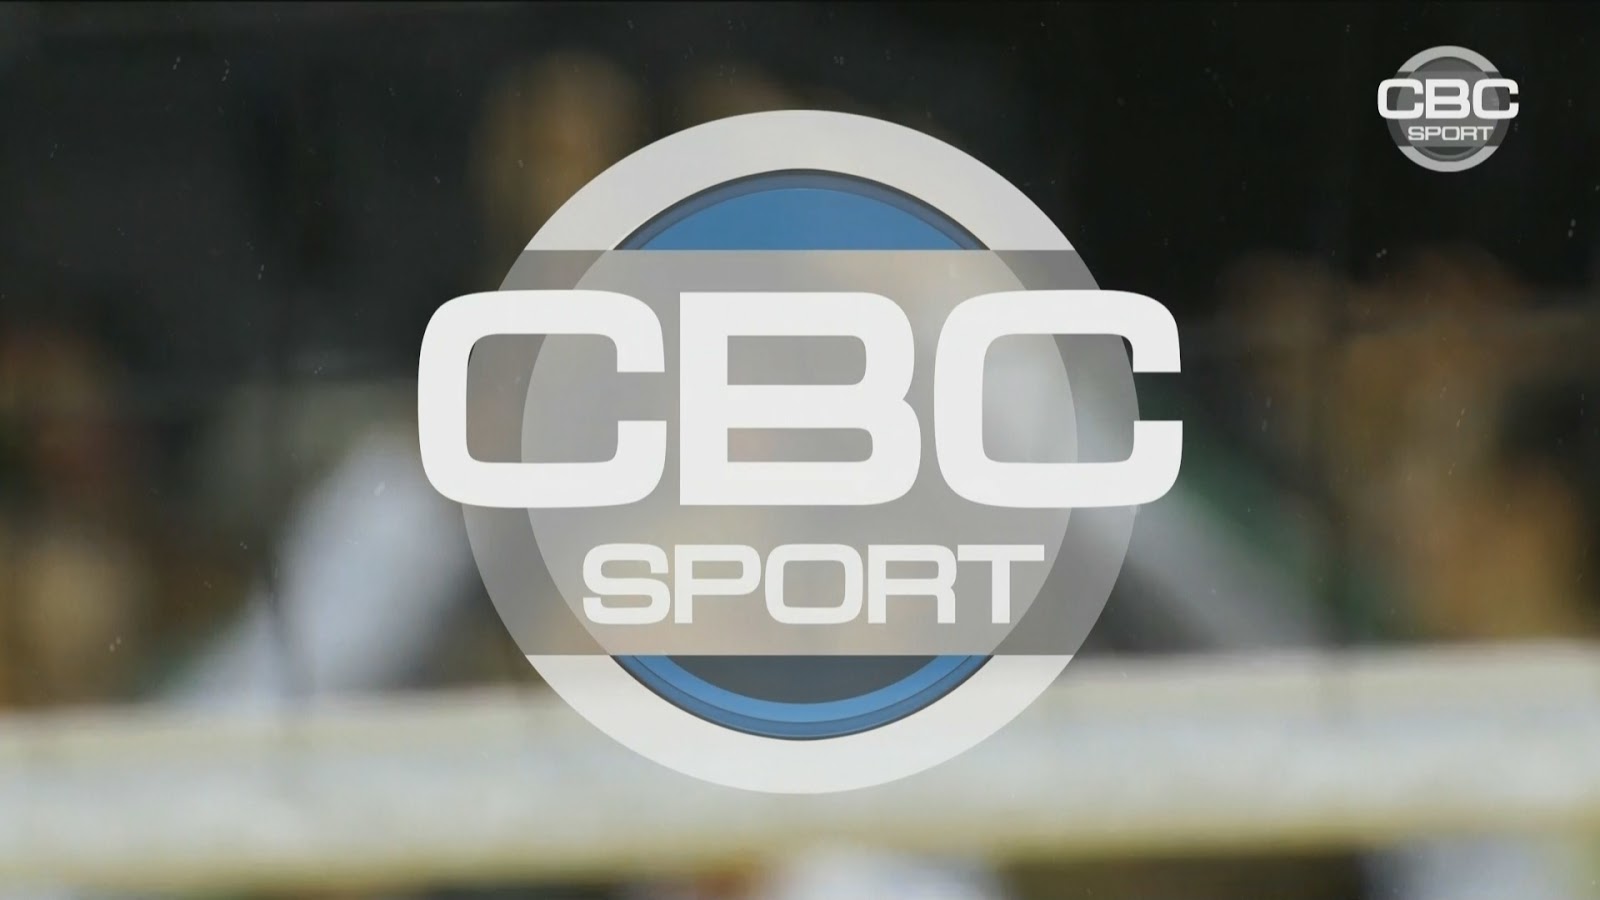 Cbc sport canli canlı izle. Телеканал CBC. СВС Sport Canli. CBC Sport Canli. CBC Sport logo.